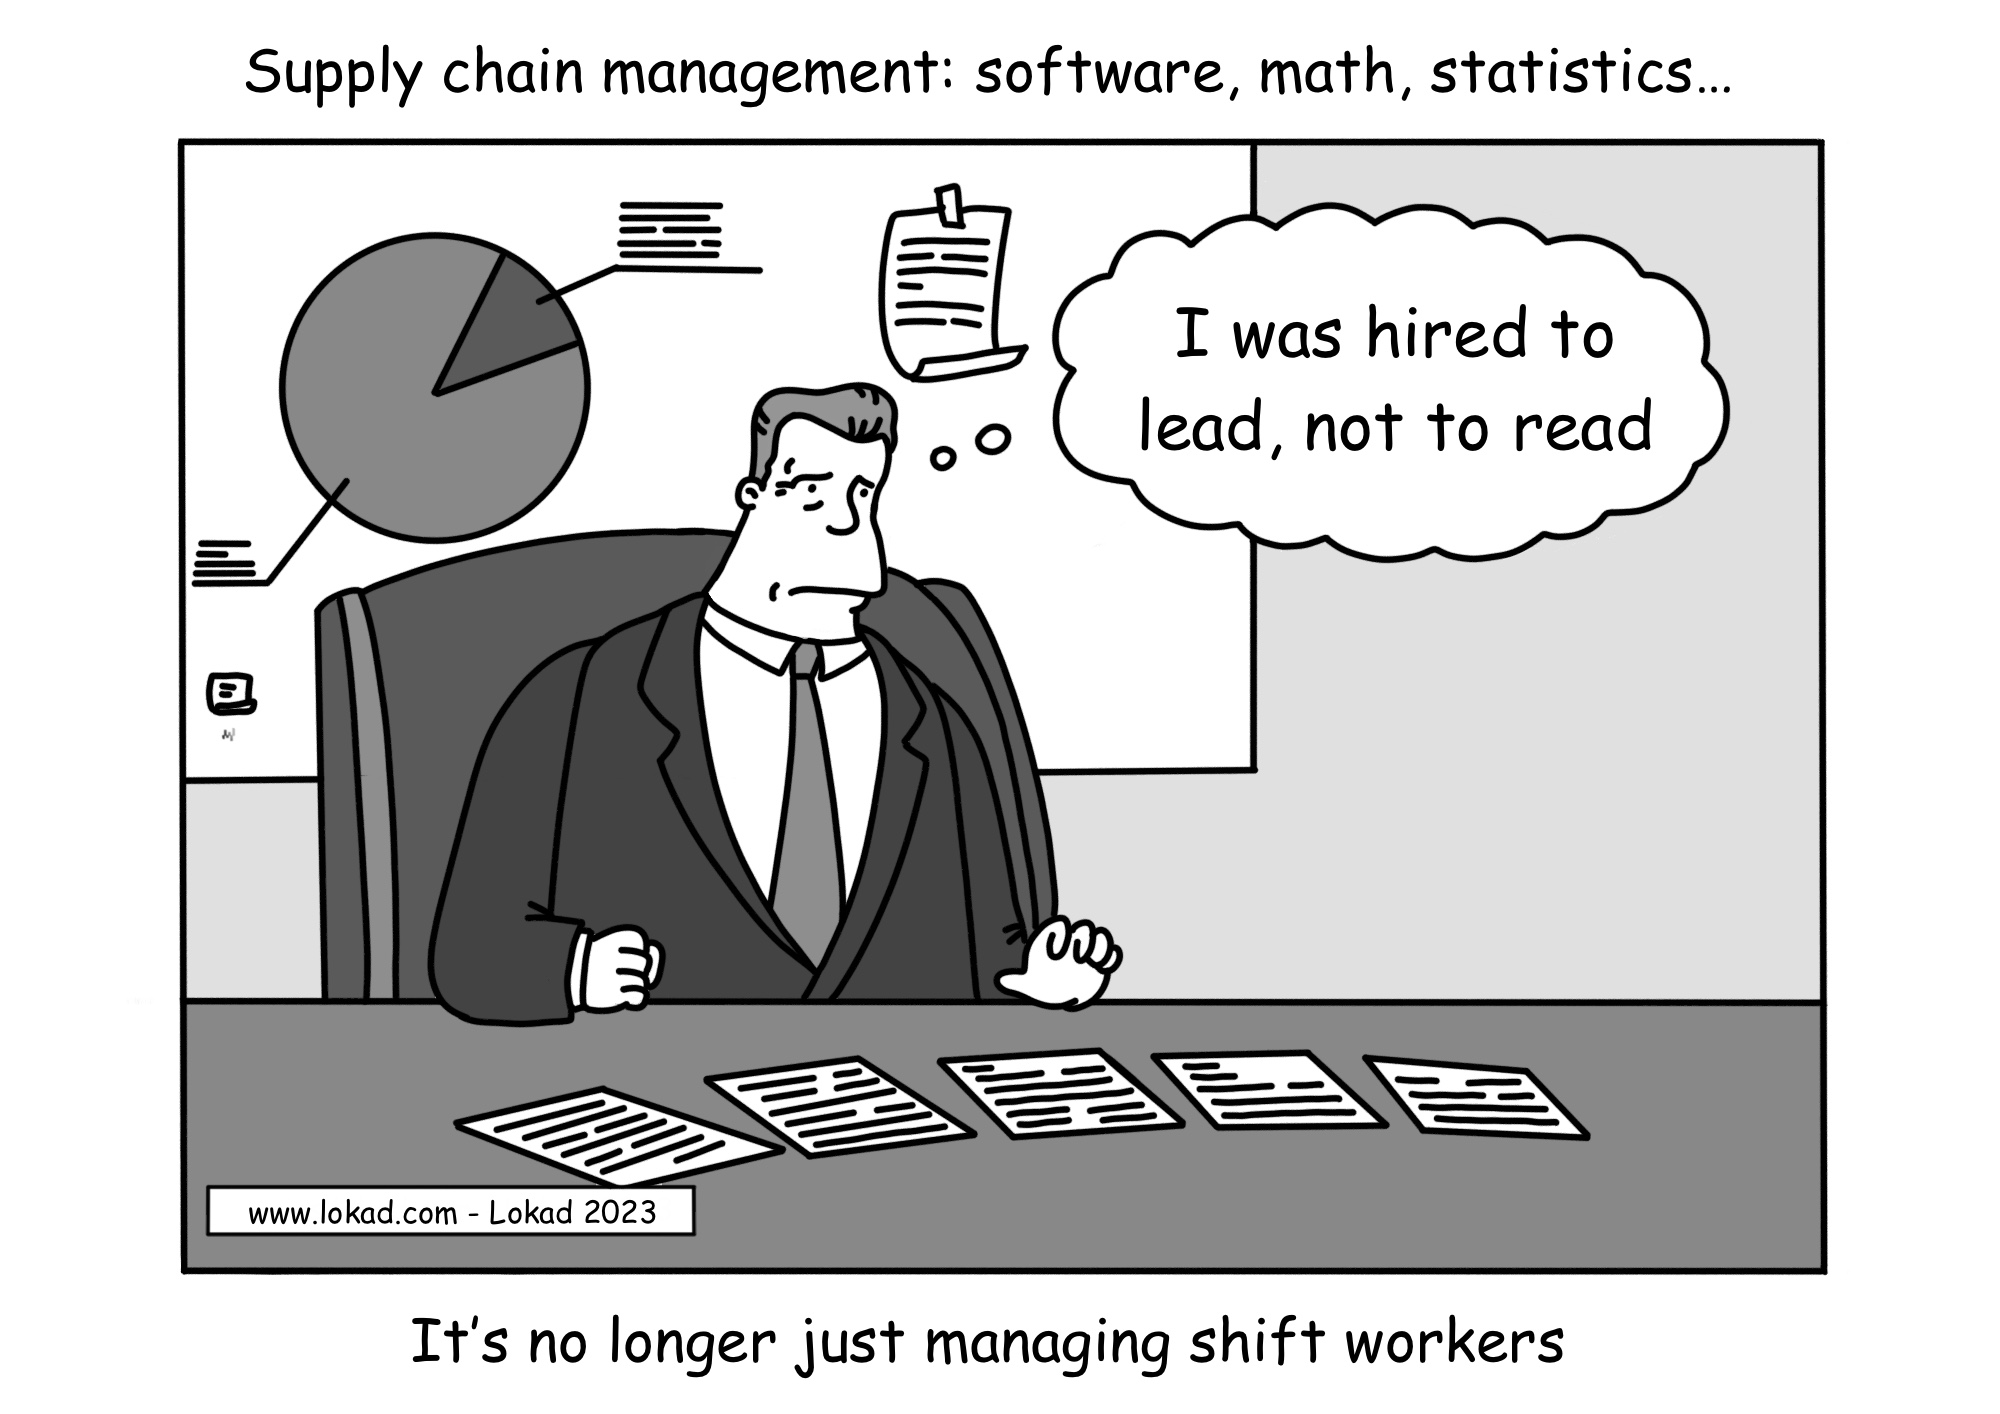 Supply chain management: software, math, statistics...